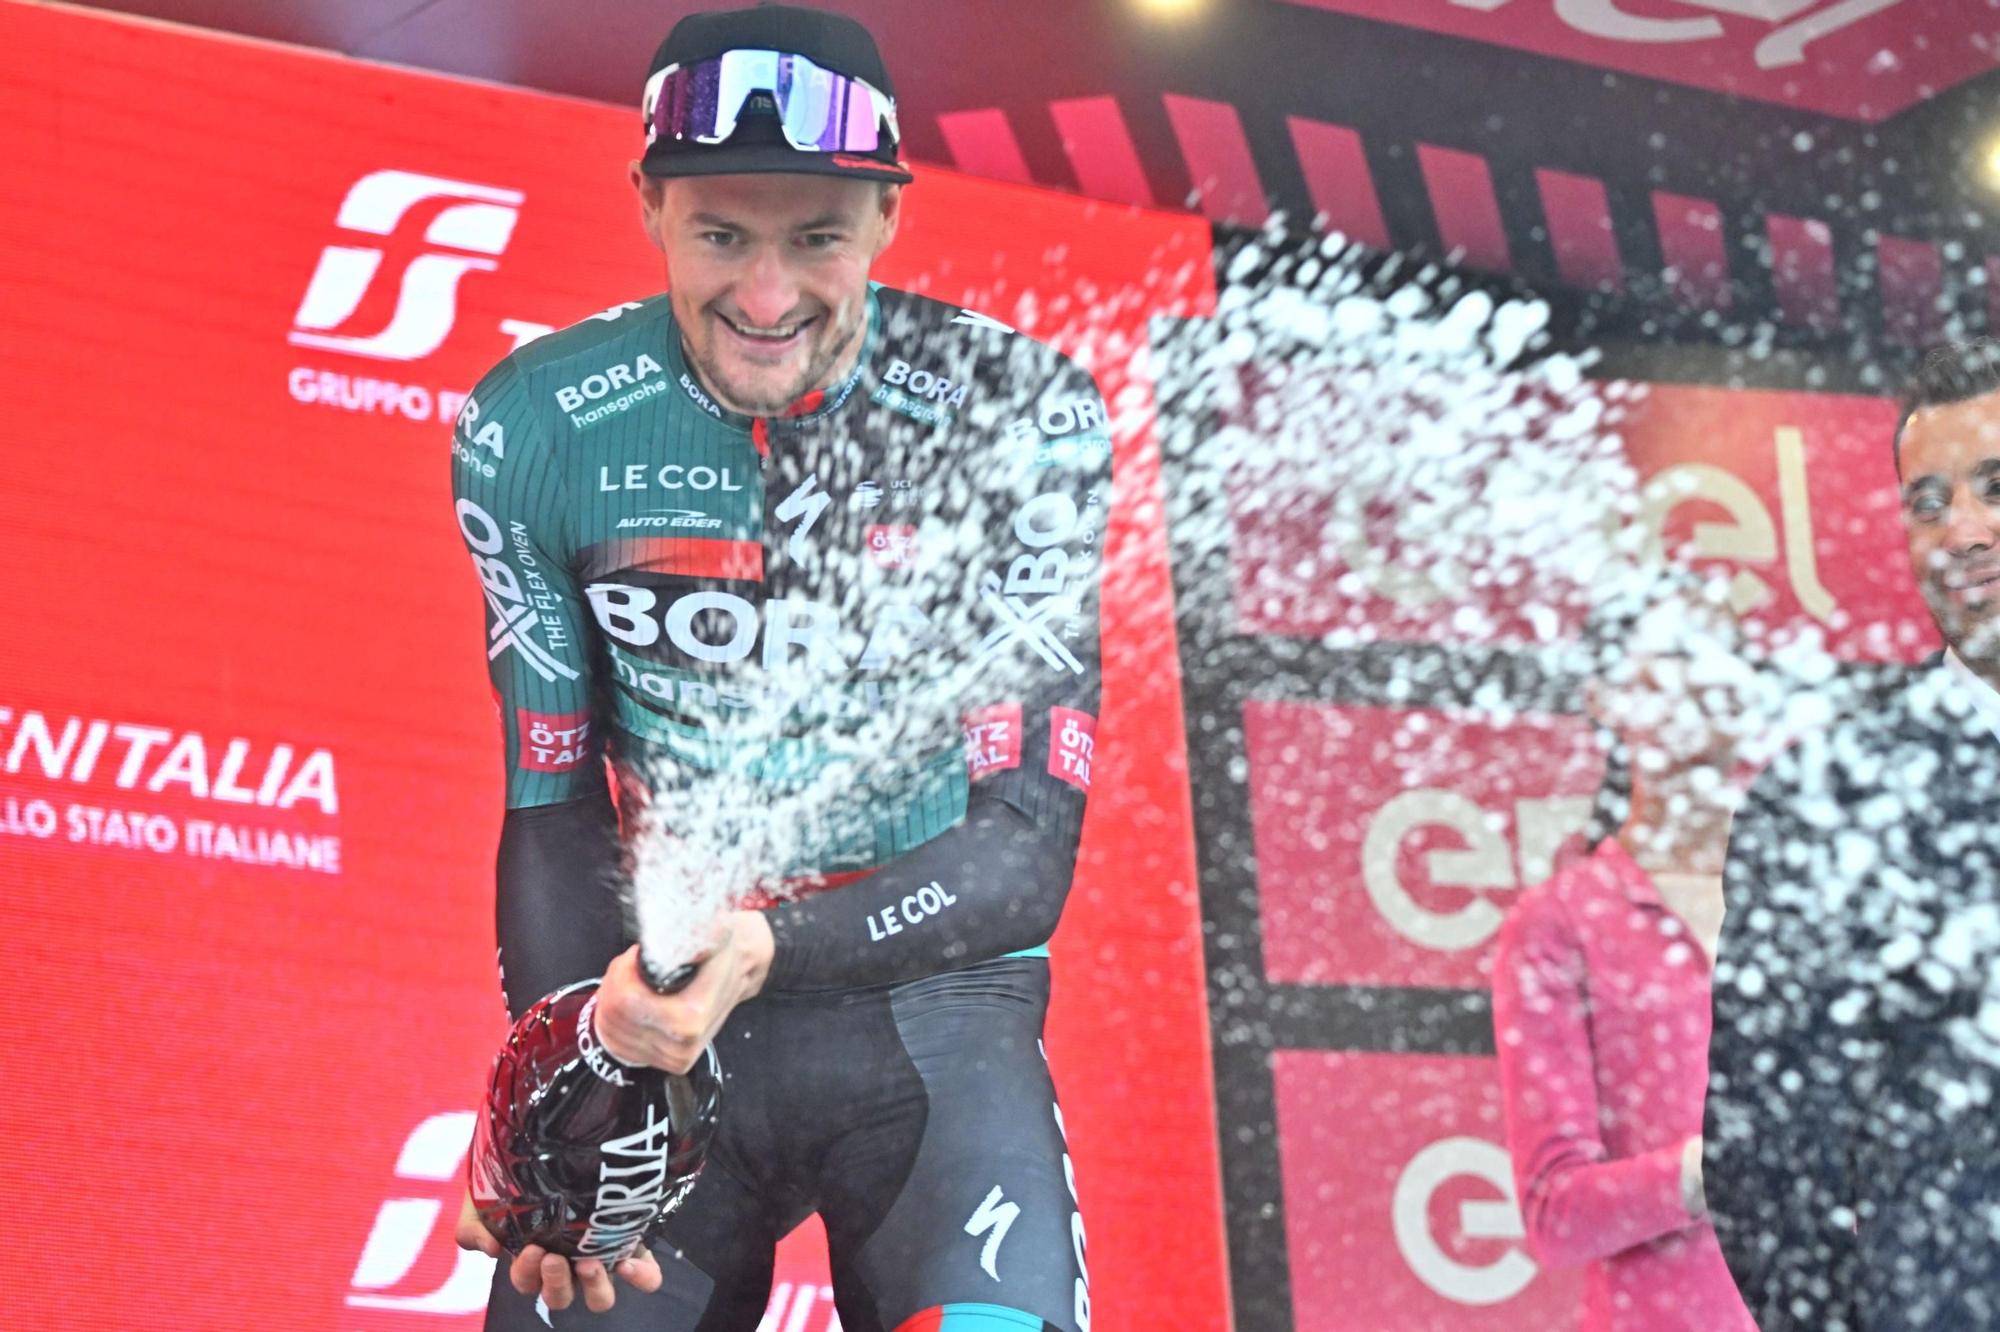 Giro d'Italia - 14th stage